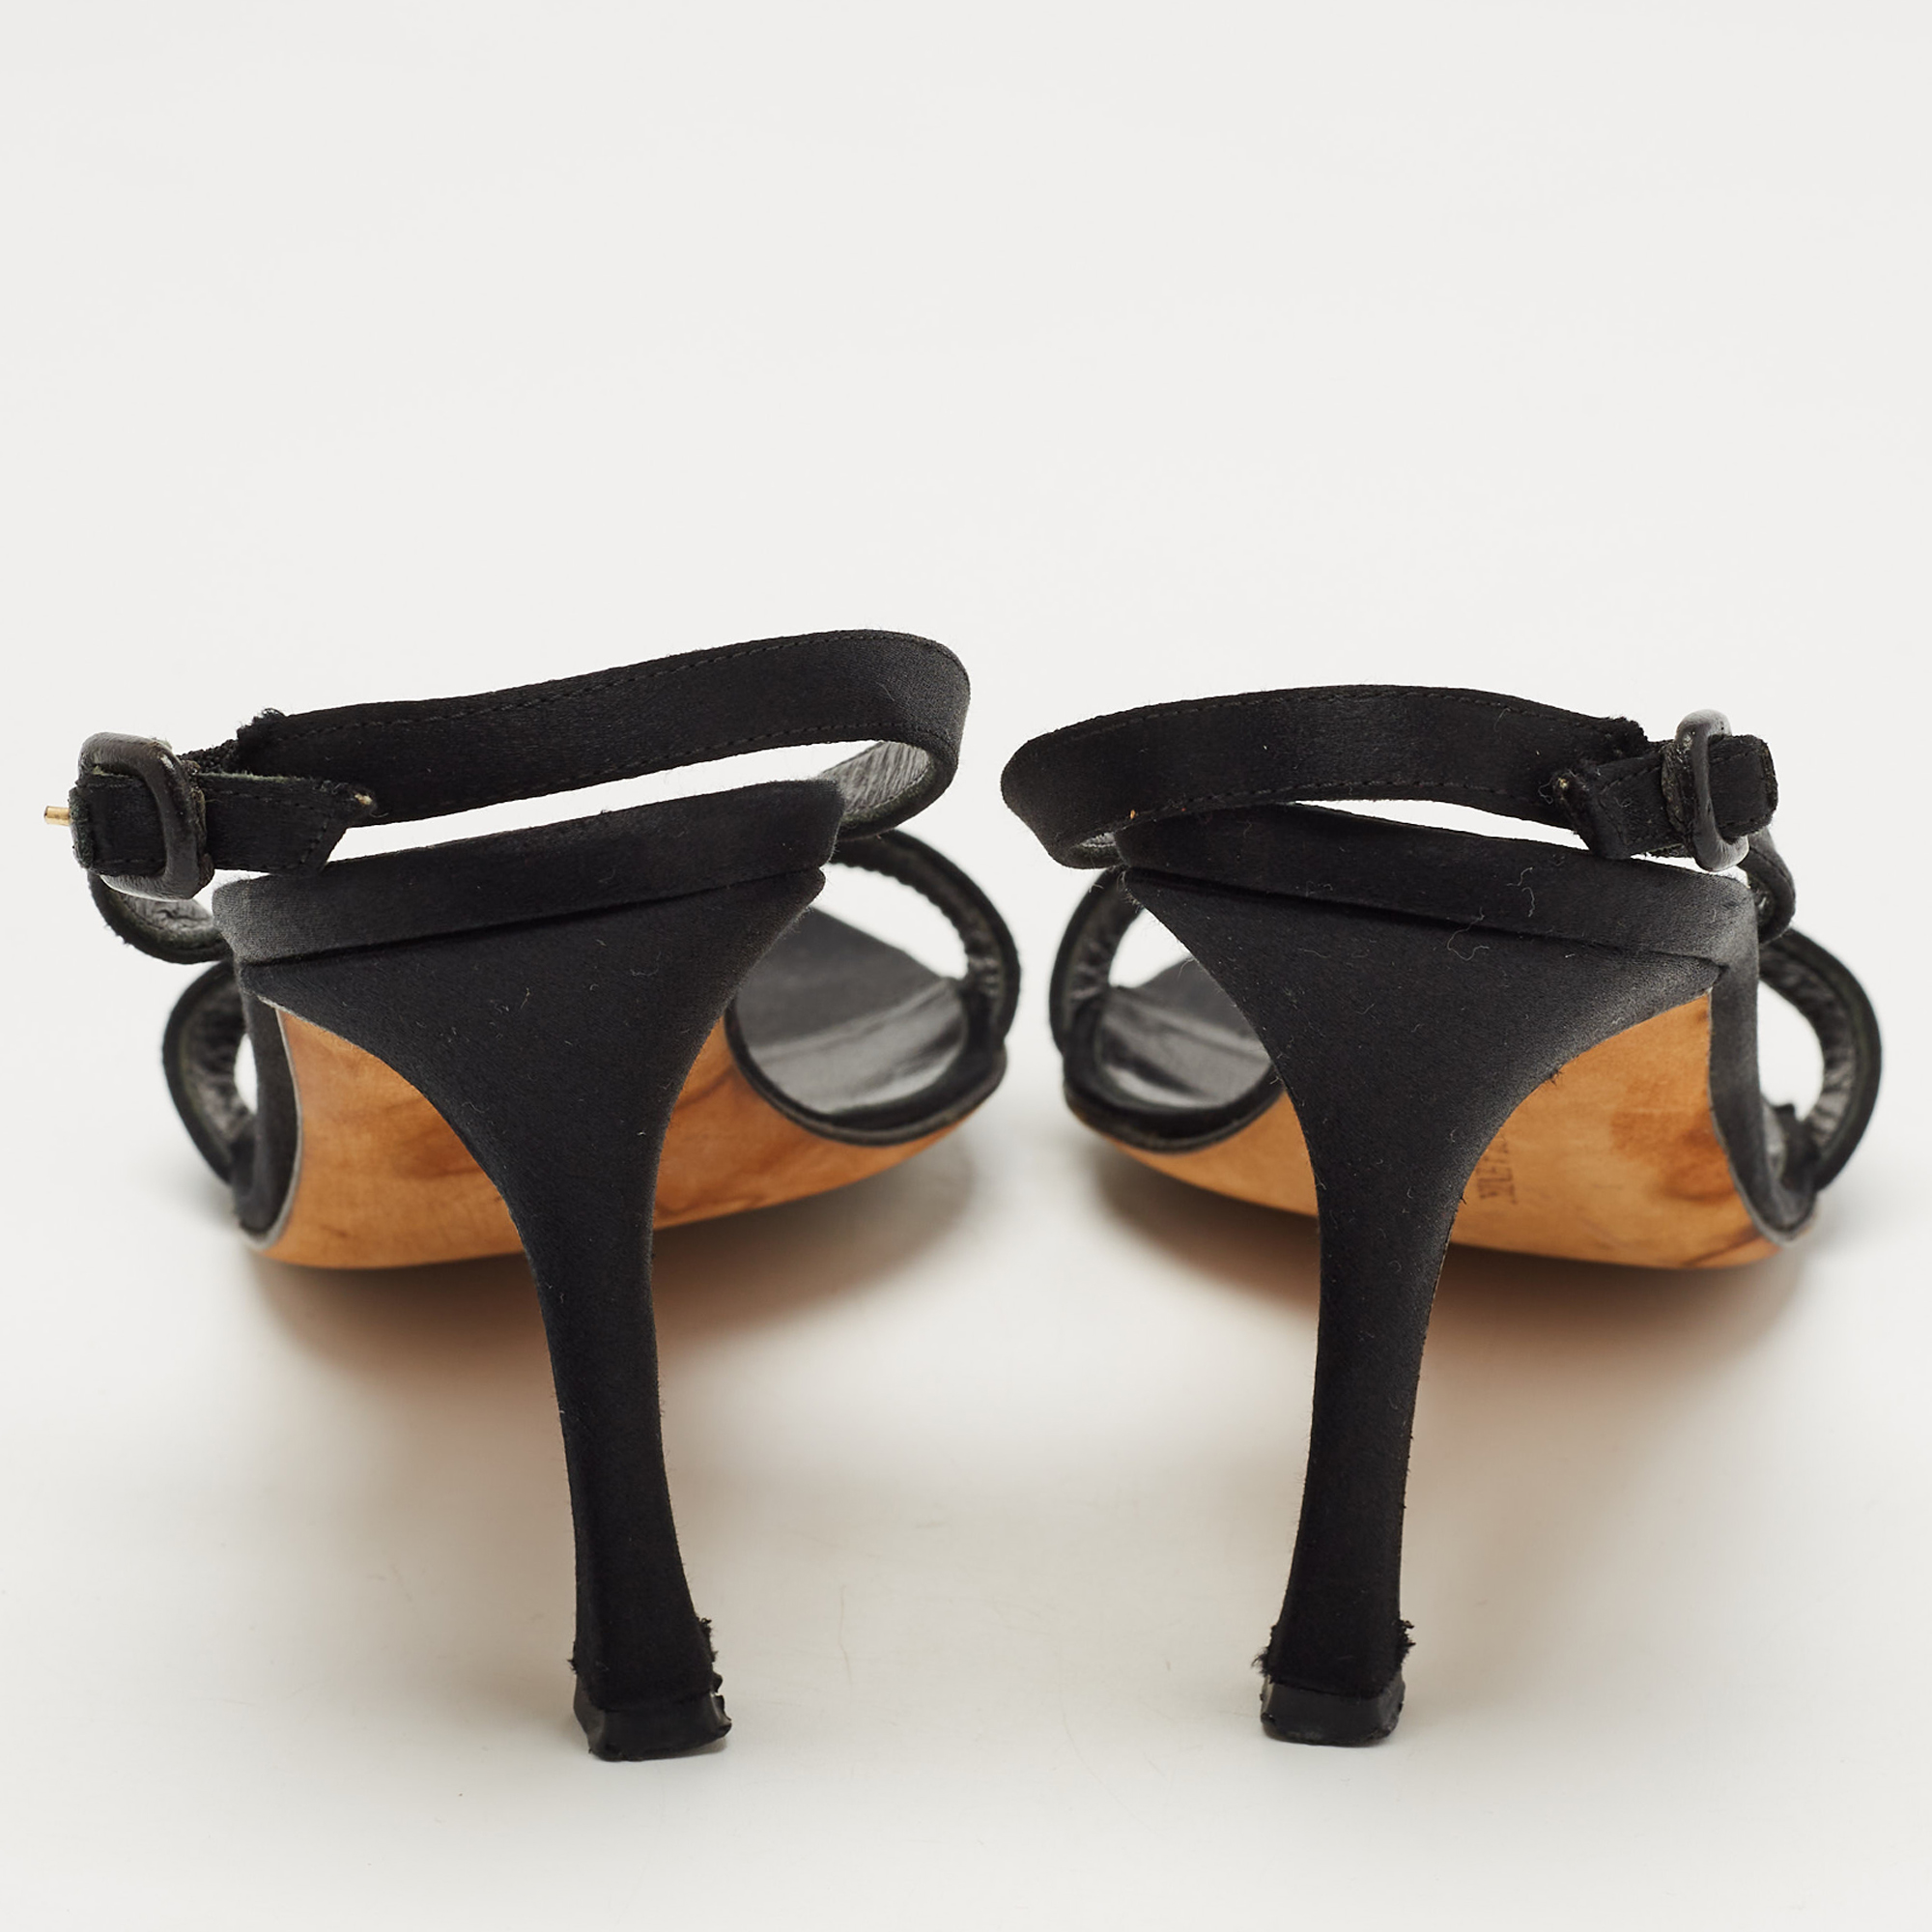 Manolo Blahnik Black Satin Slingback Sandals Size 37.5